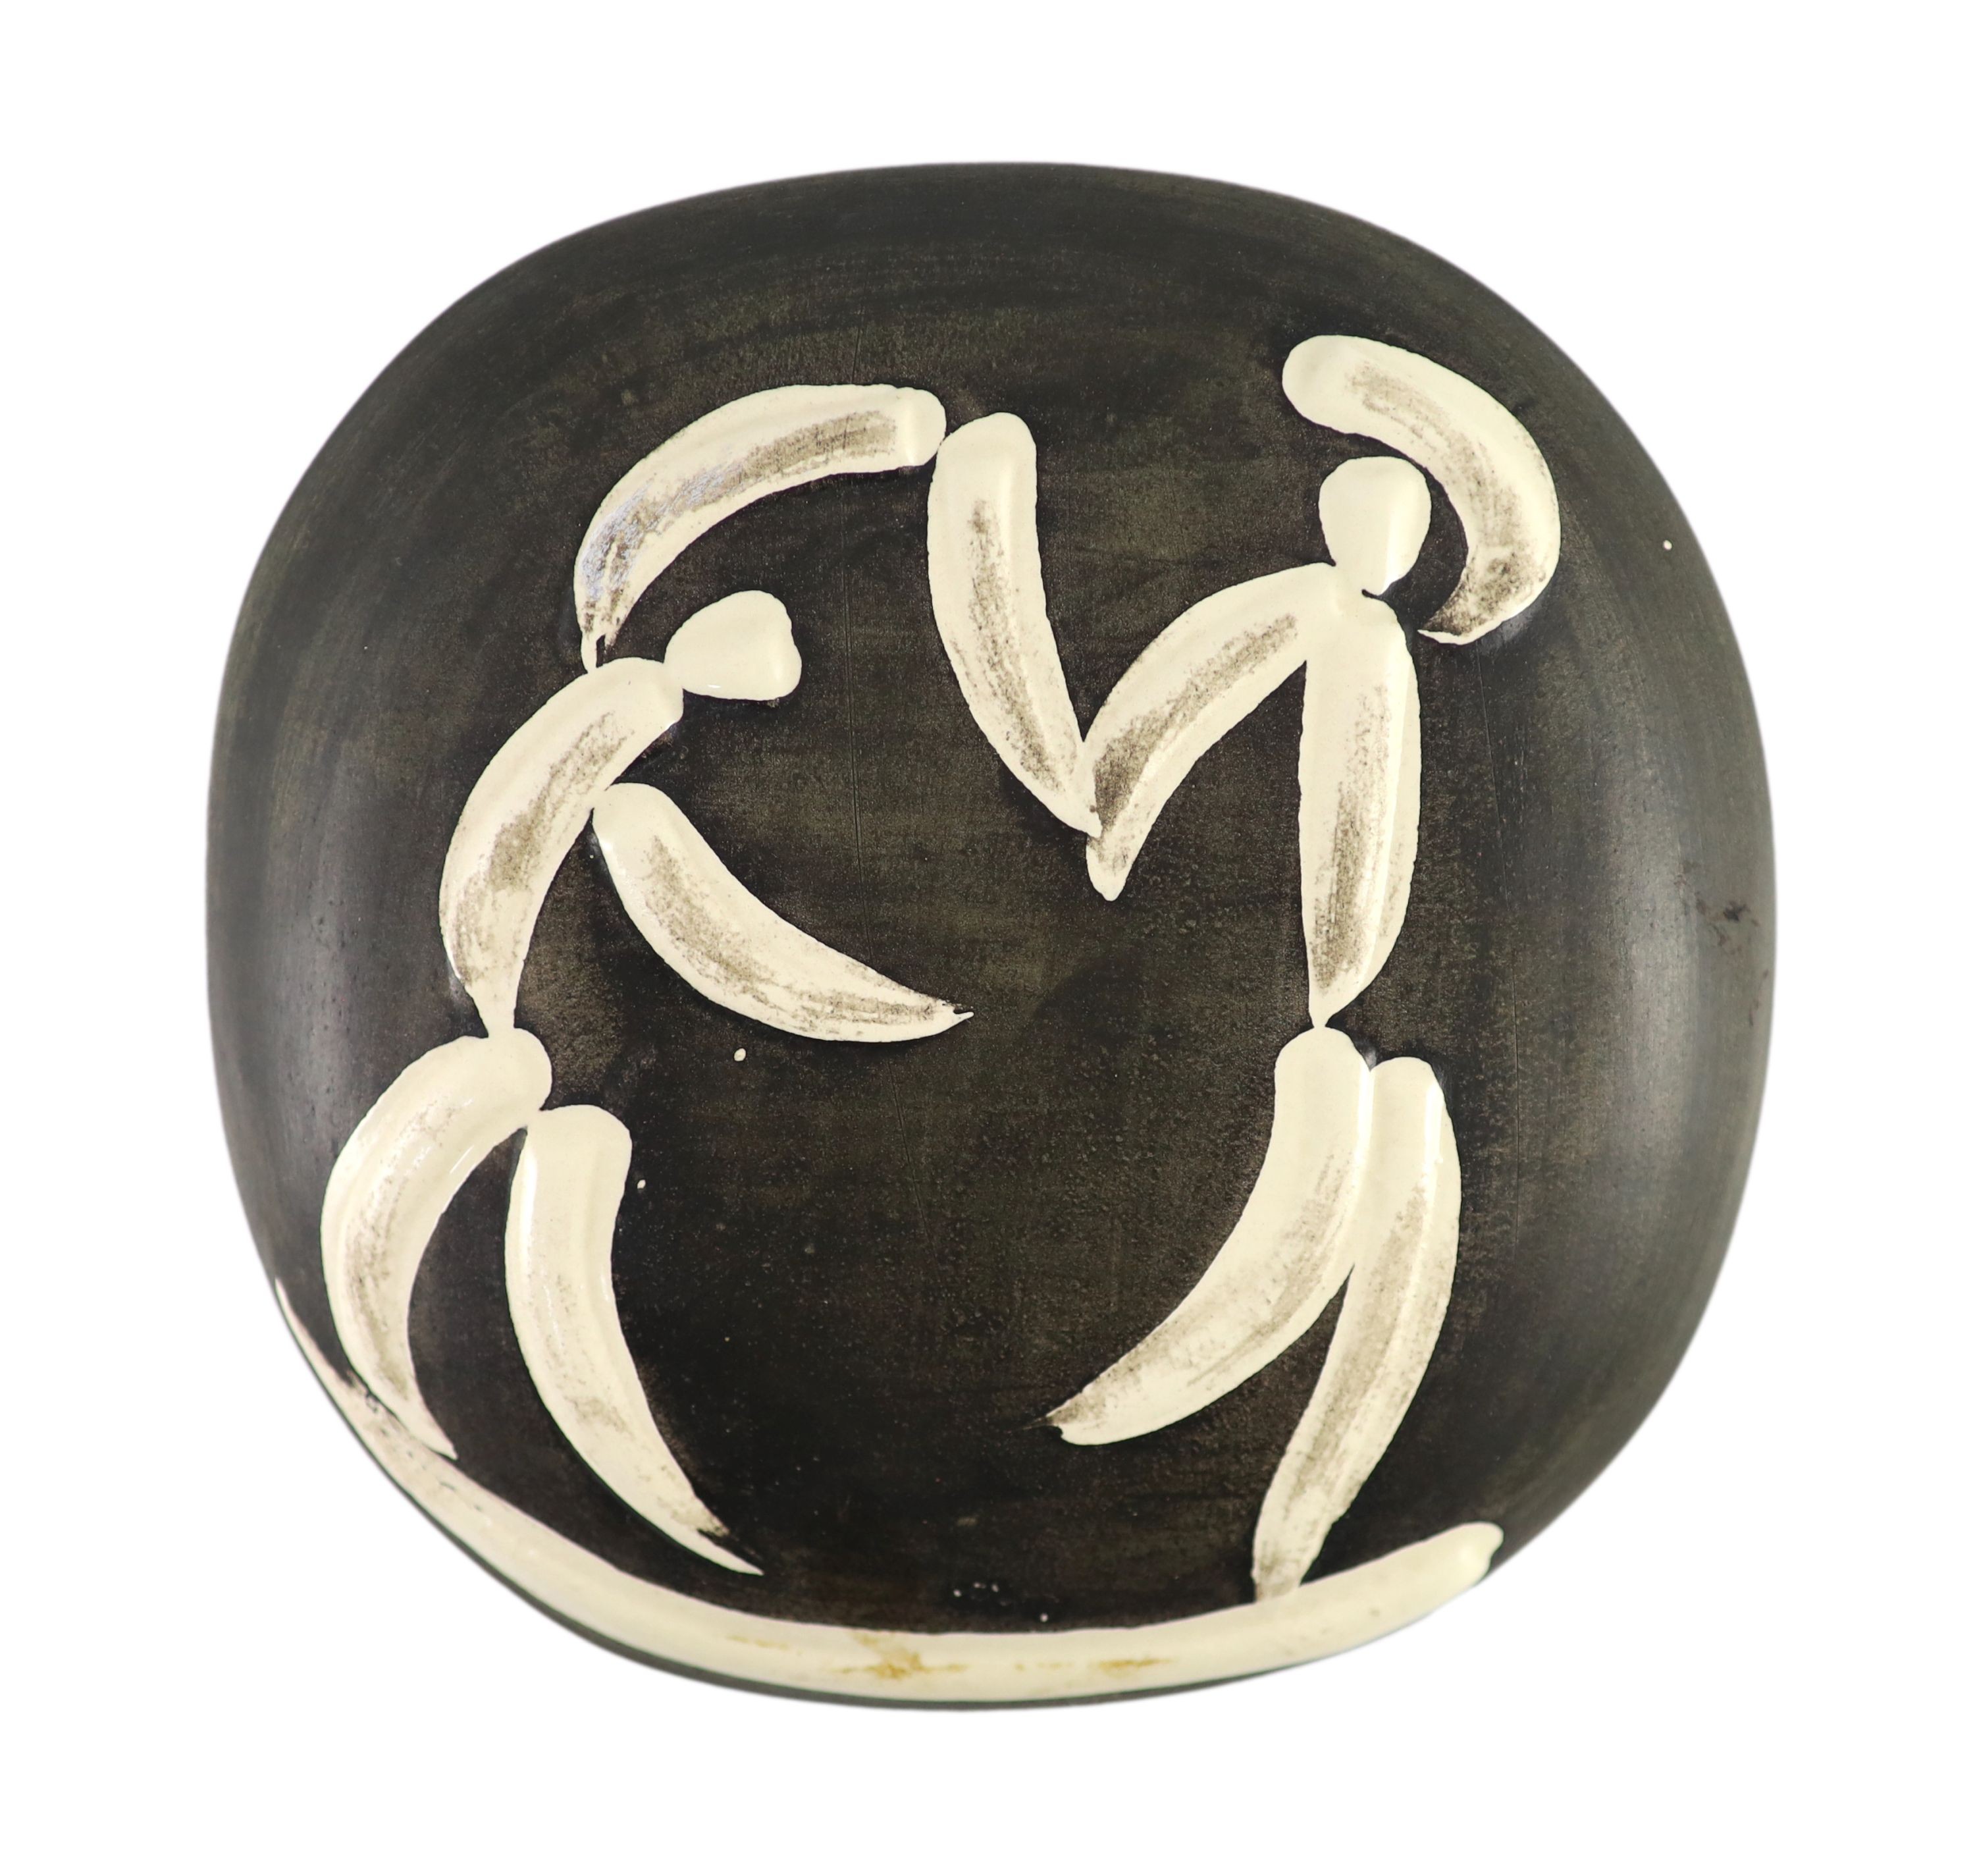 Pablo Picasso (Spanish 1881-1973) for Madoura pottery, Danseurs [A.R. 388] plaque, 1956, 18.5cm wide